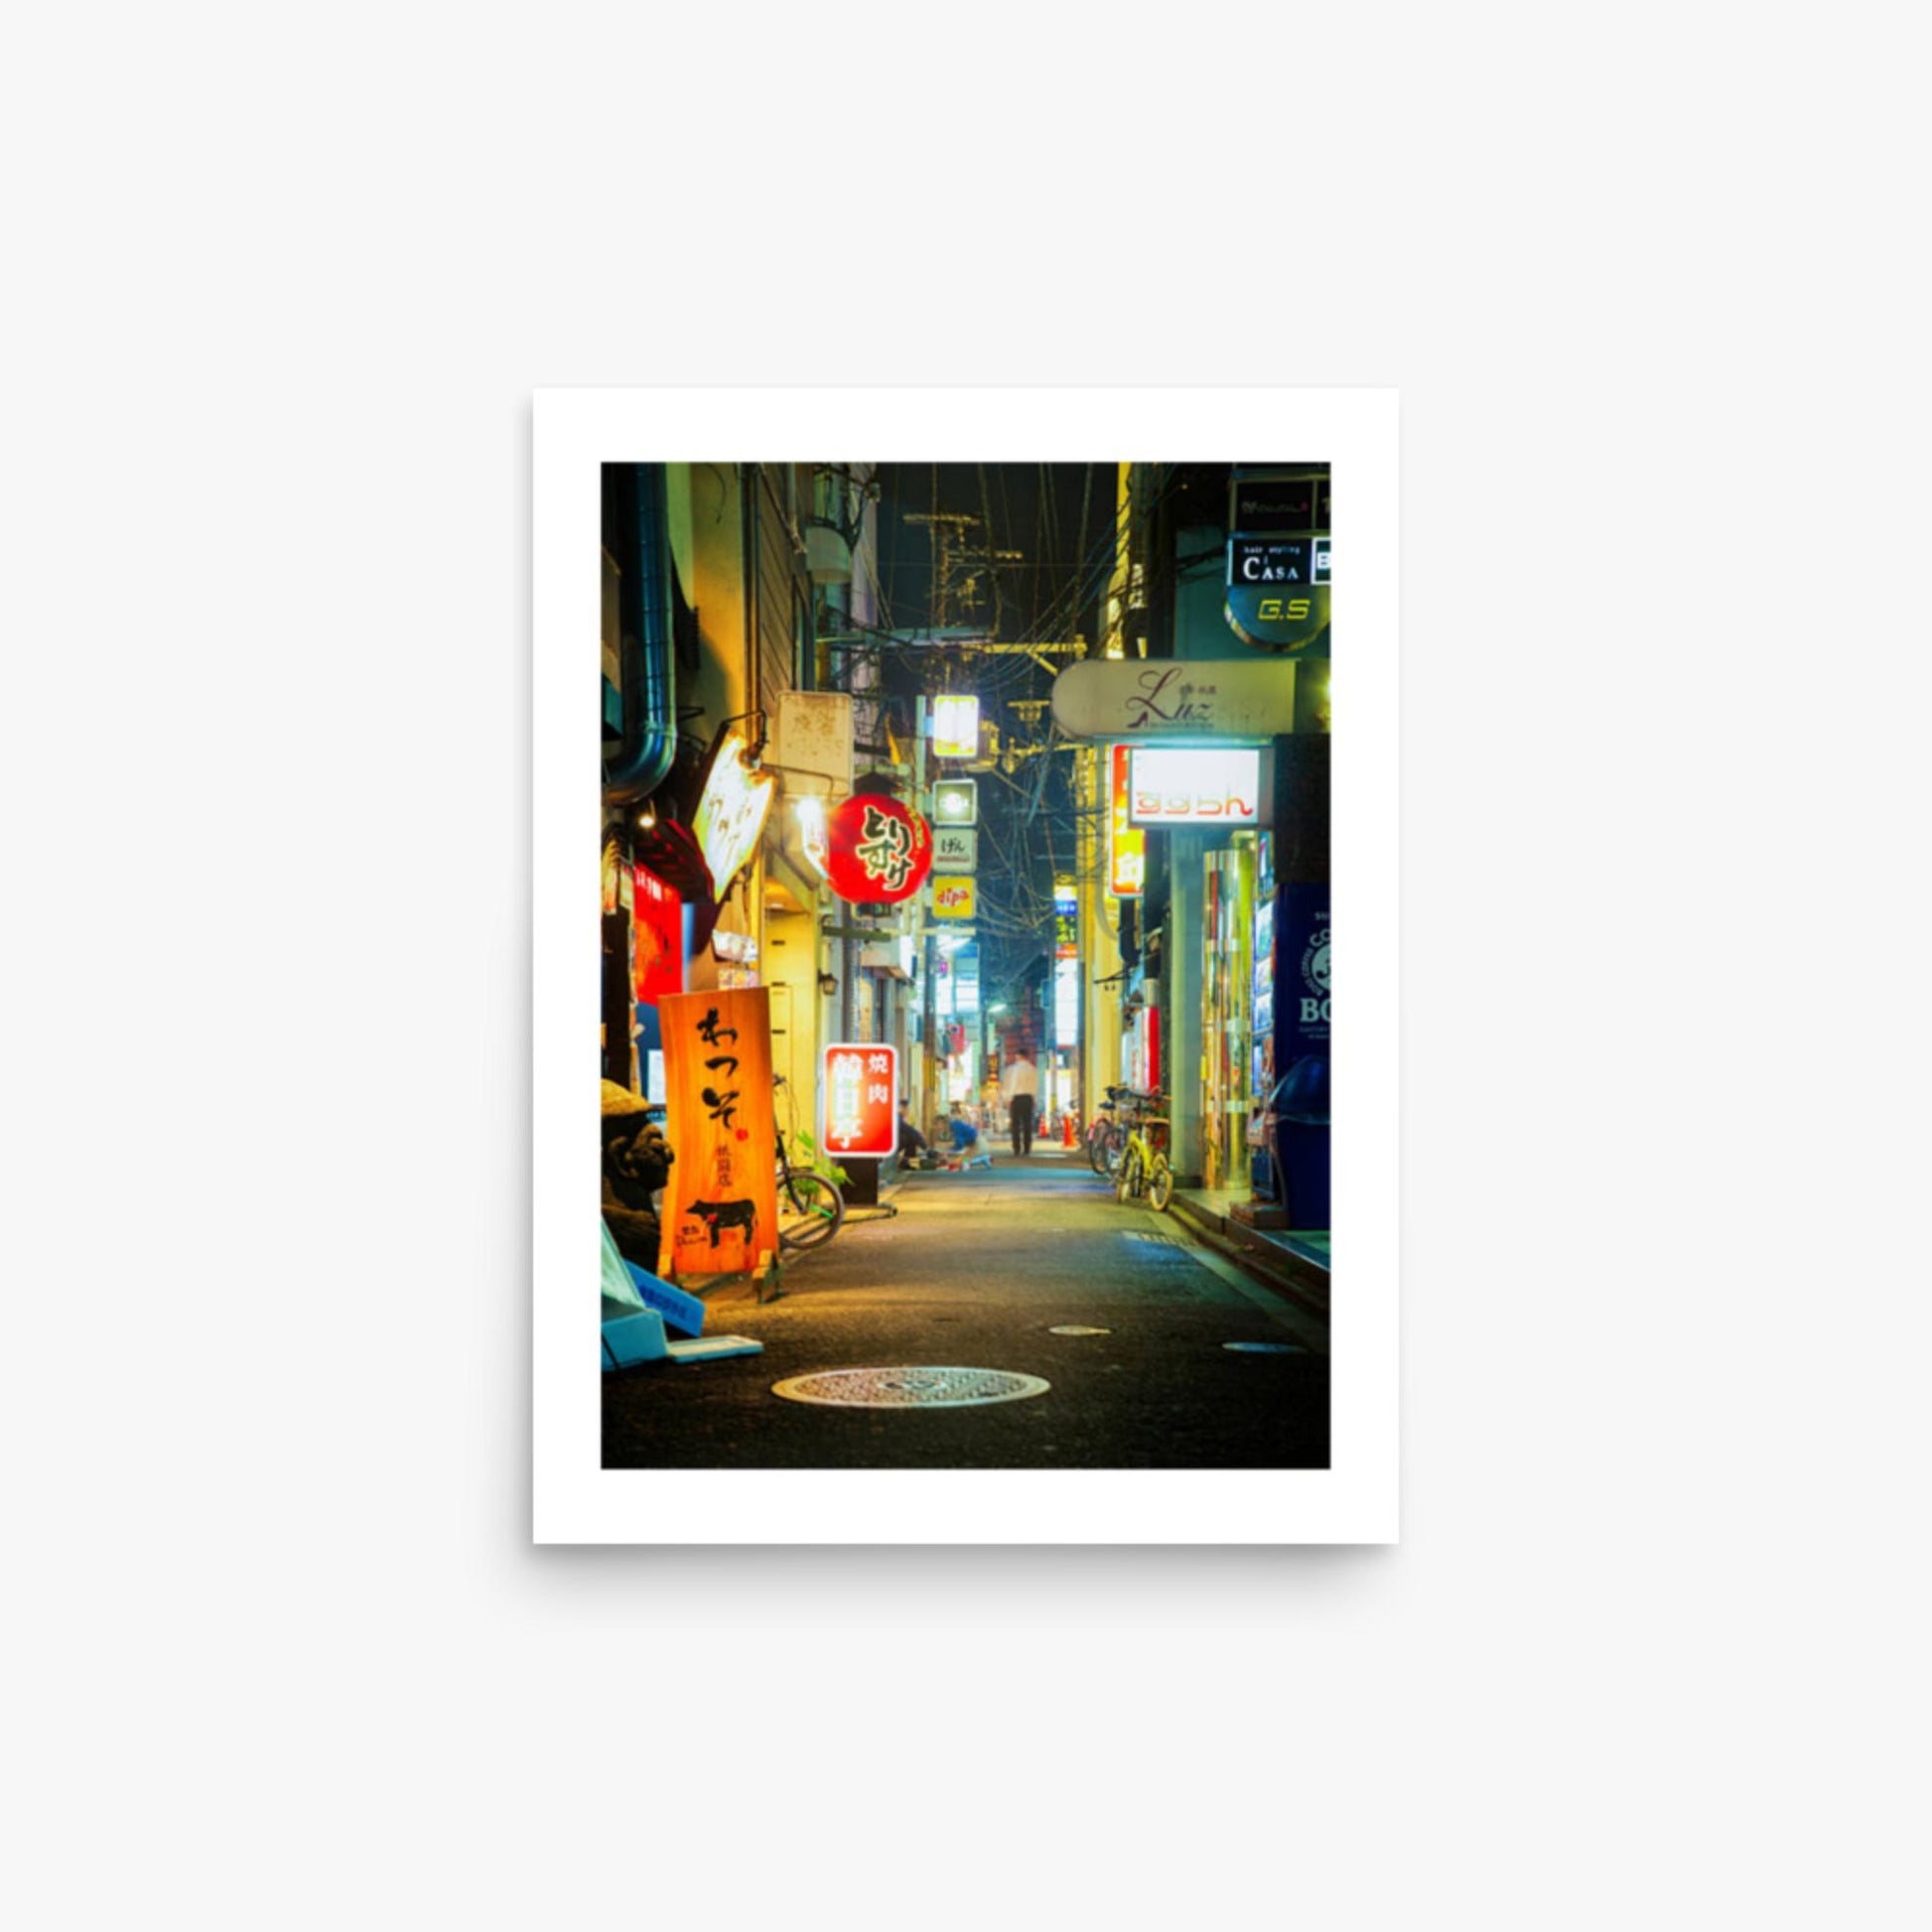 Kyoto, Japan backstreet at night 12x16 in Poster